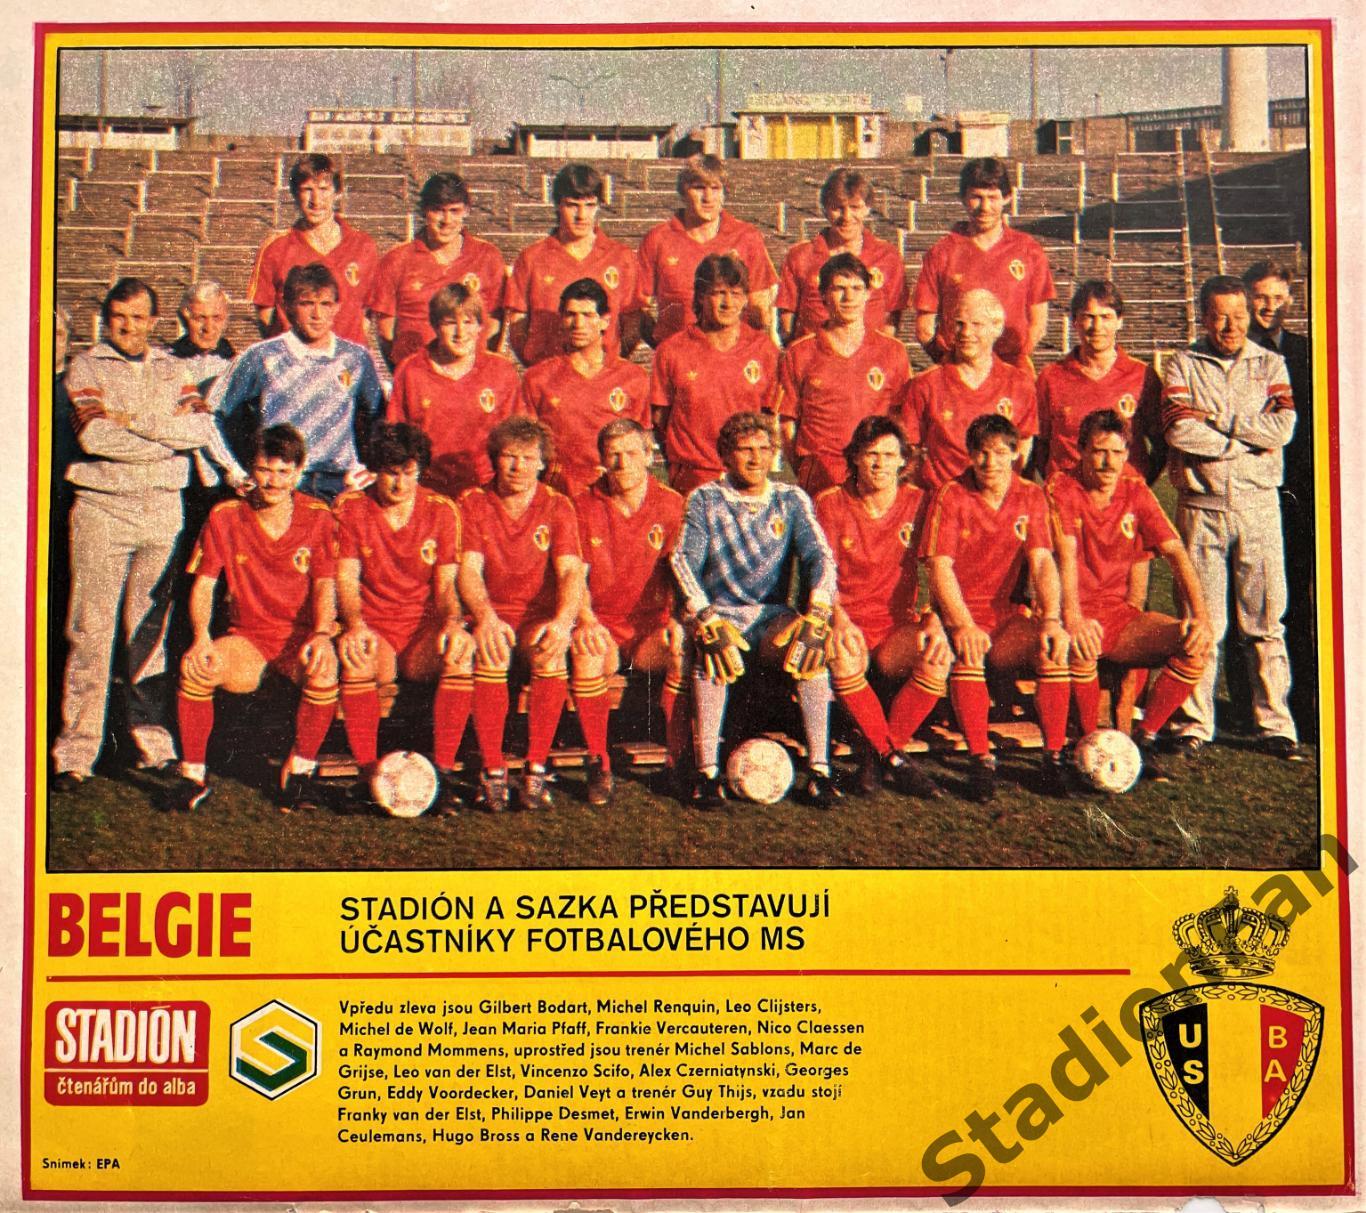 Постер из журнала Стадион (Stadion) - Belgie, 1986